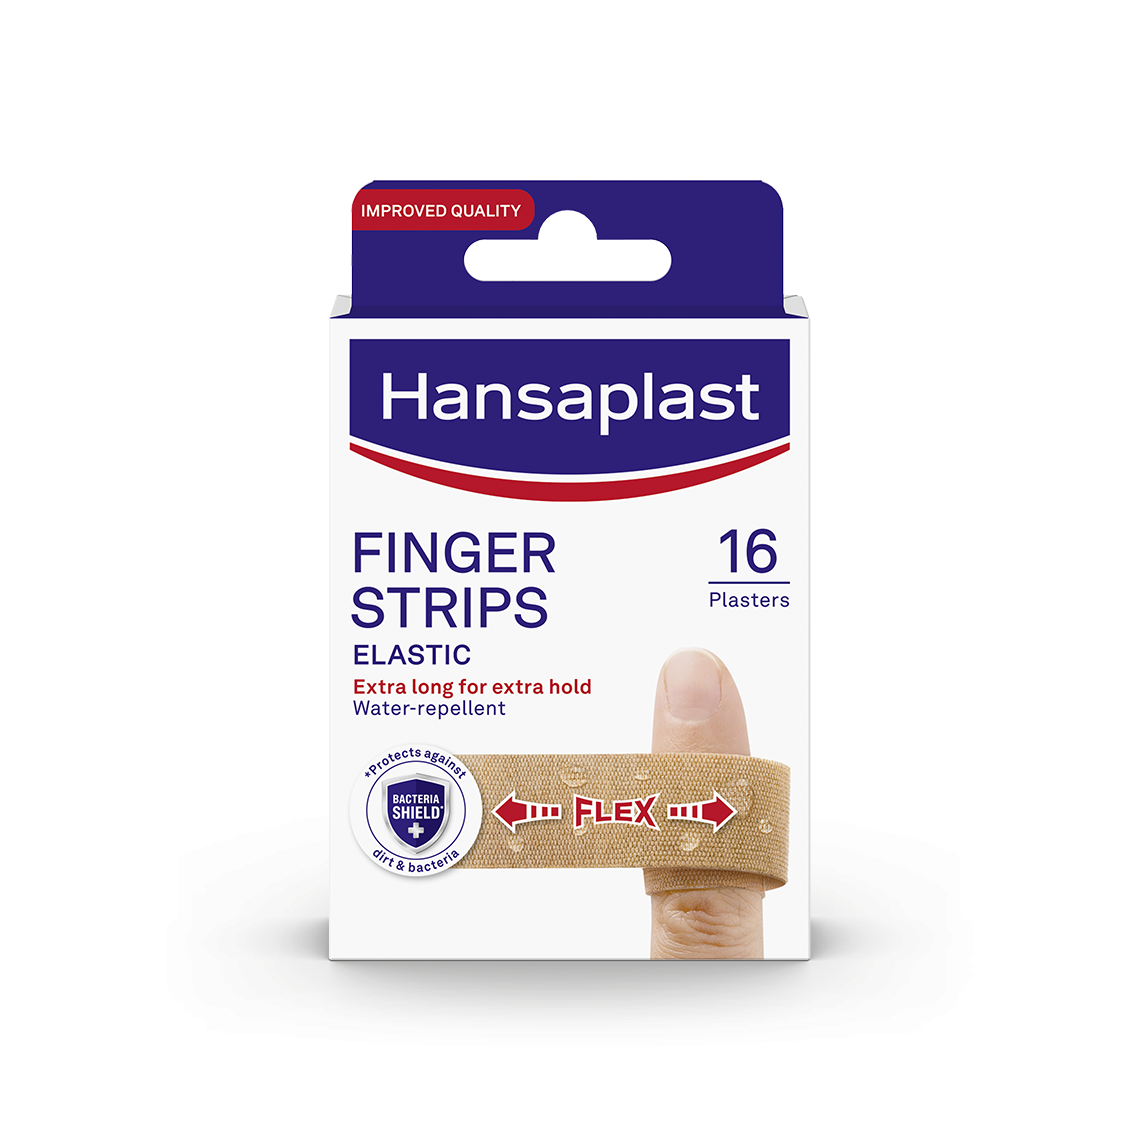 Hansaplast® Finger Strips 120 mm x 20 mm wasserfest 100 St - SHOP